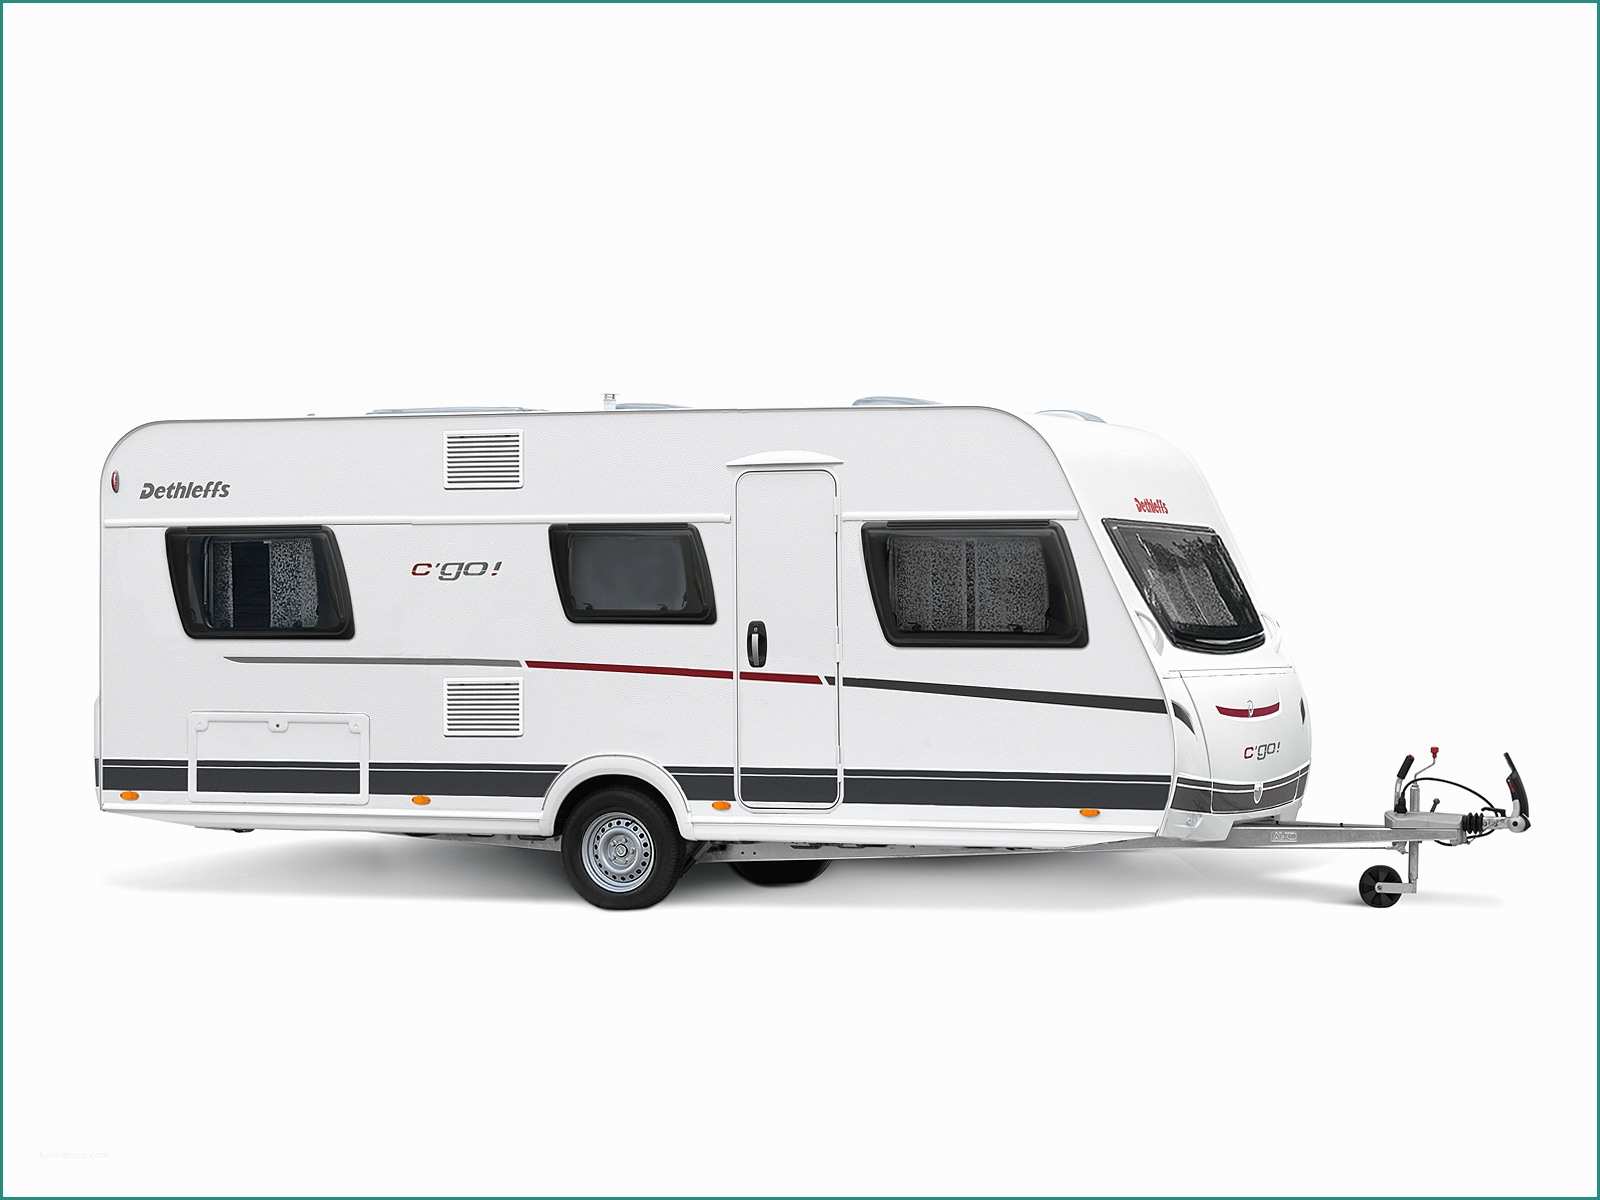 Iveco Daily X Camper Usato E Camper Caravan Motor Caravan Alcova Integrato